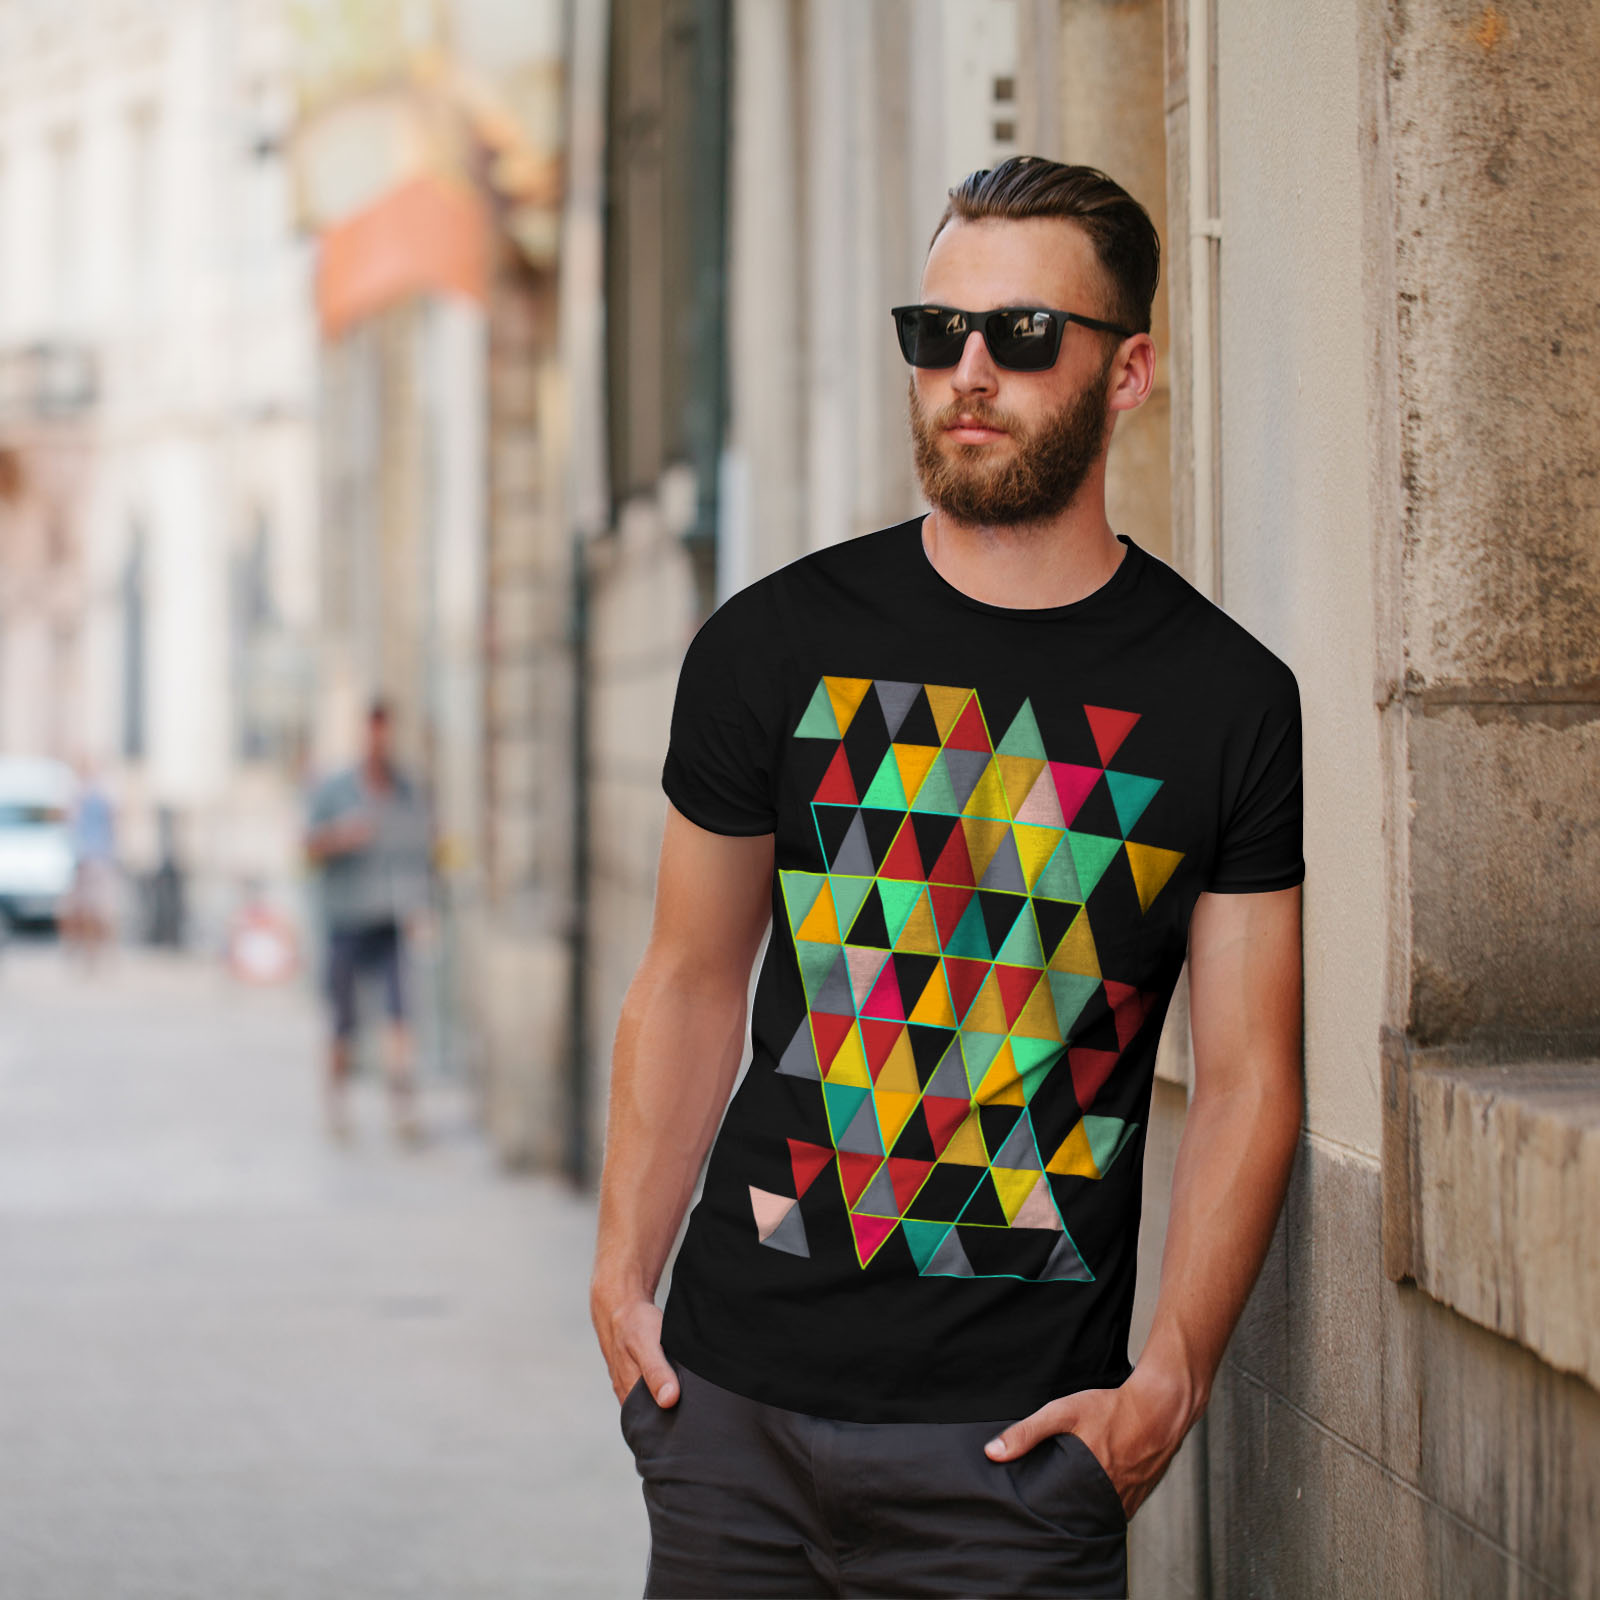 Colorful Graphic Design Printed Tee Wellcoda Geometric Pattern Mens T-shirt 